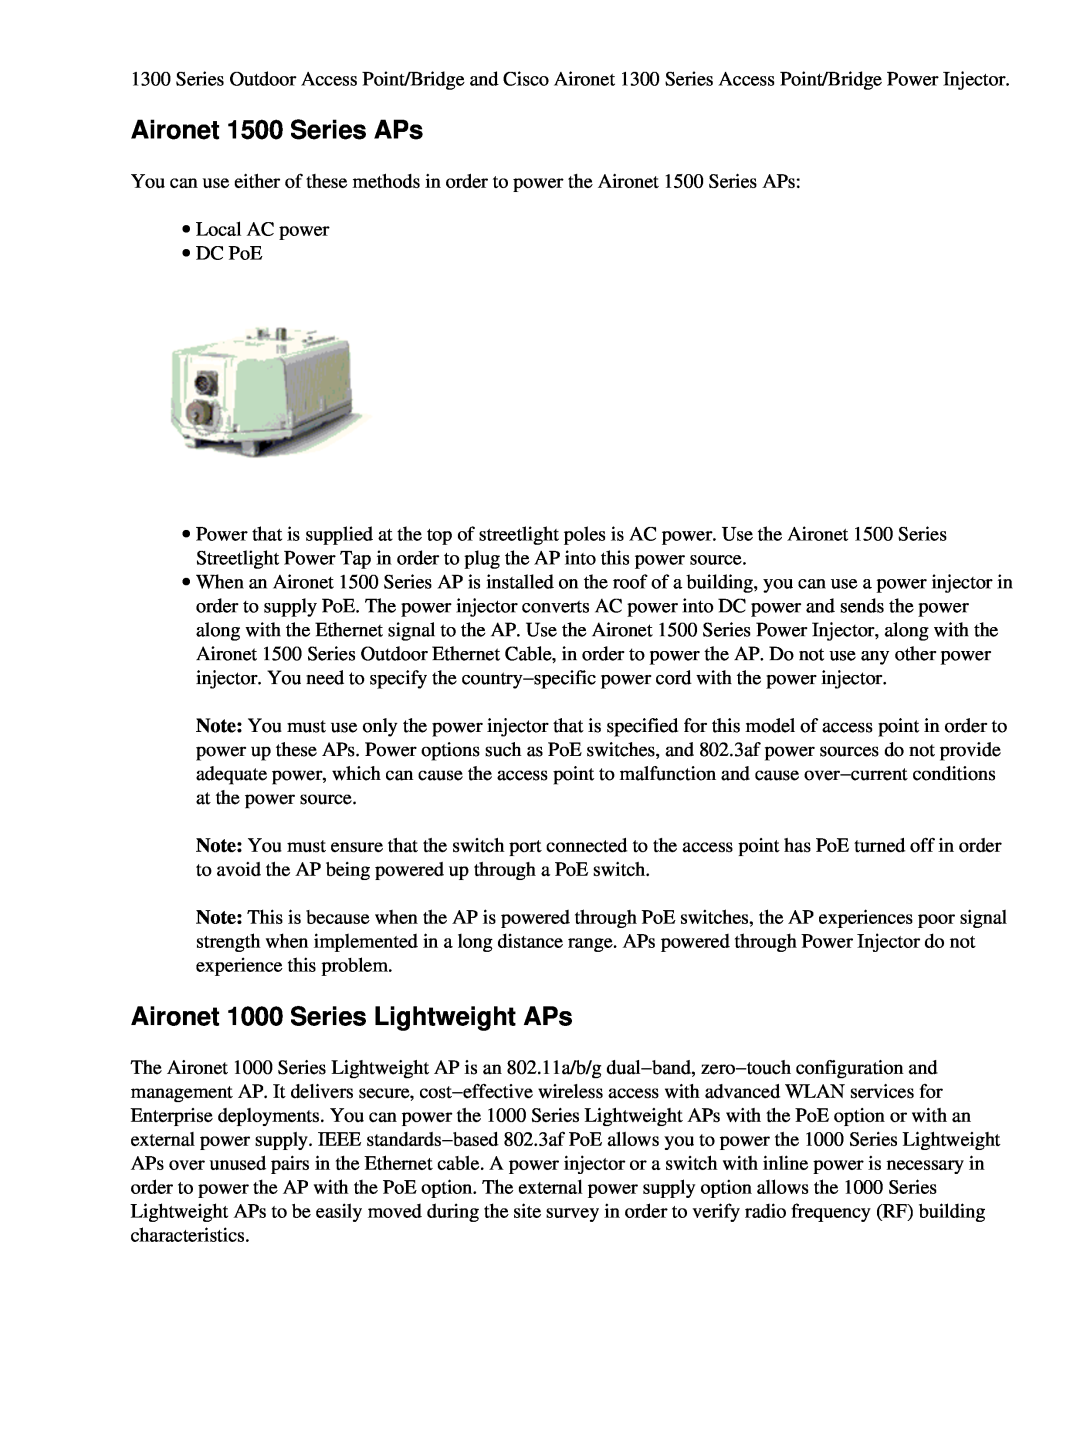 Cisco Systems UCSCRAIDMZ220, 2008M-8i manual Aironet 1500 Series APs, Aironet 1000 Series Lightweight APs 